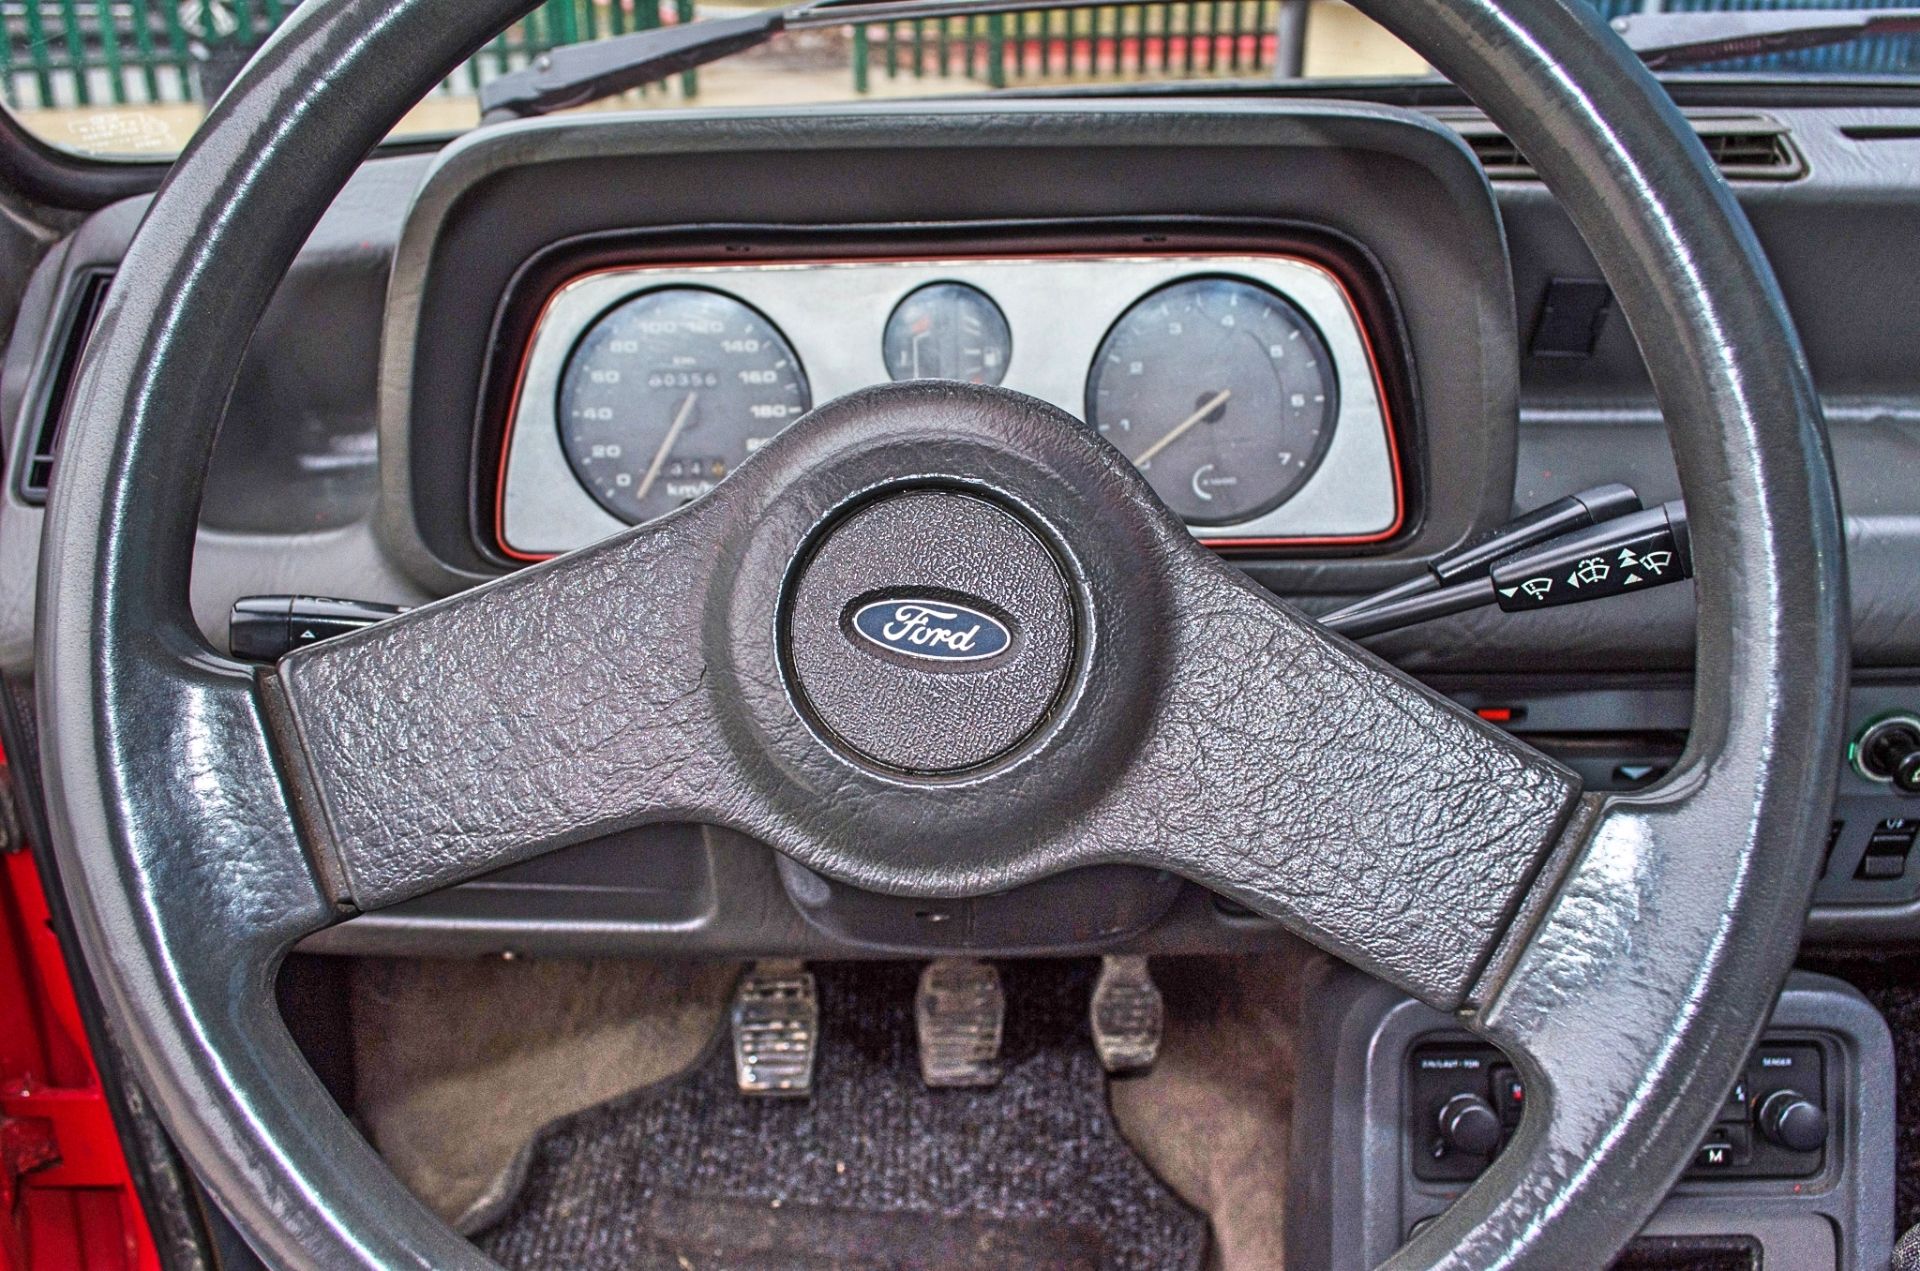 1983 Ford Fiesta XR2 1600cc 3 door hatchback - Image 37 of 47